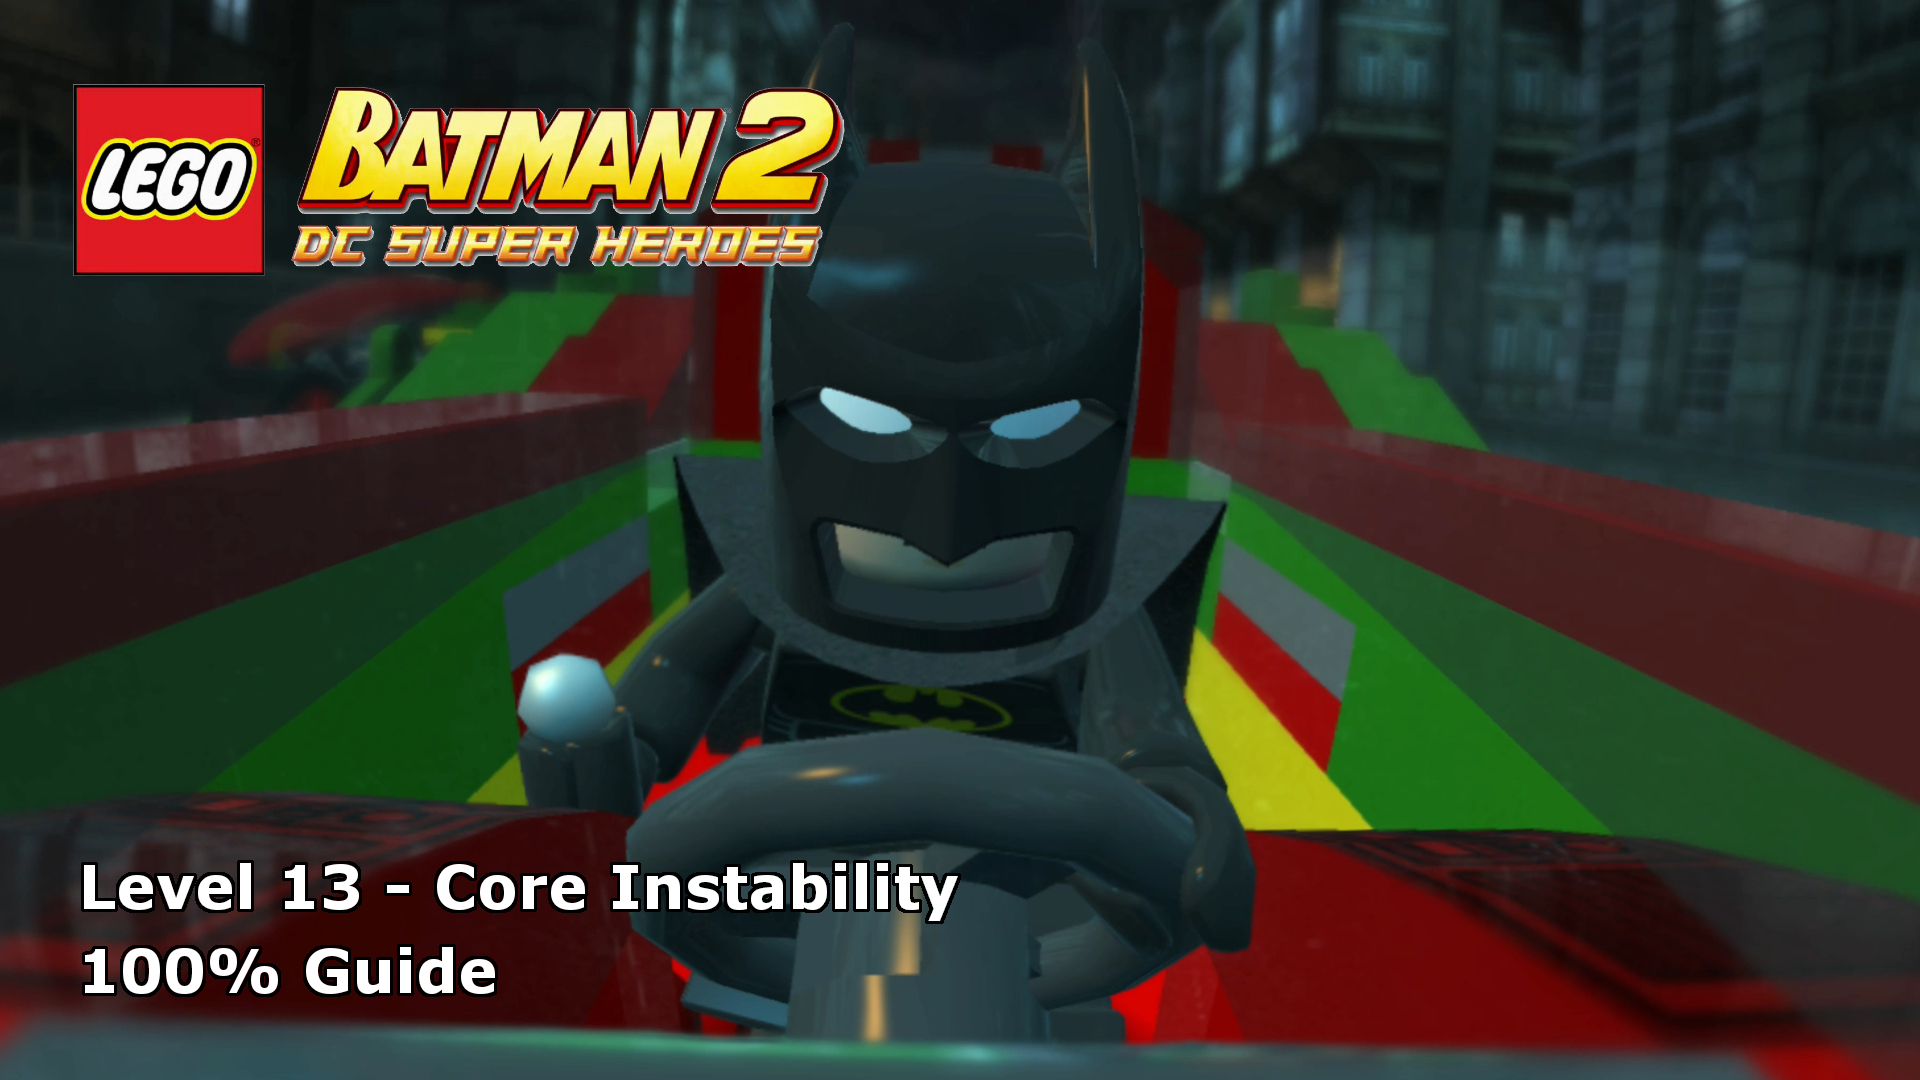 Lego Batman 2: DC Super Heroes – Core Instability Guide